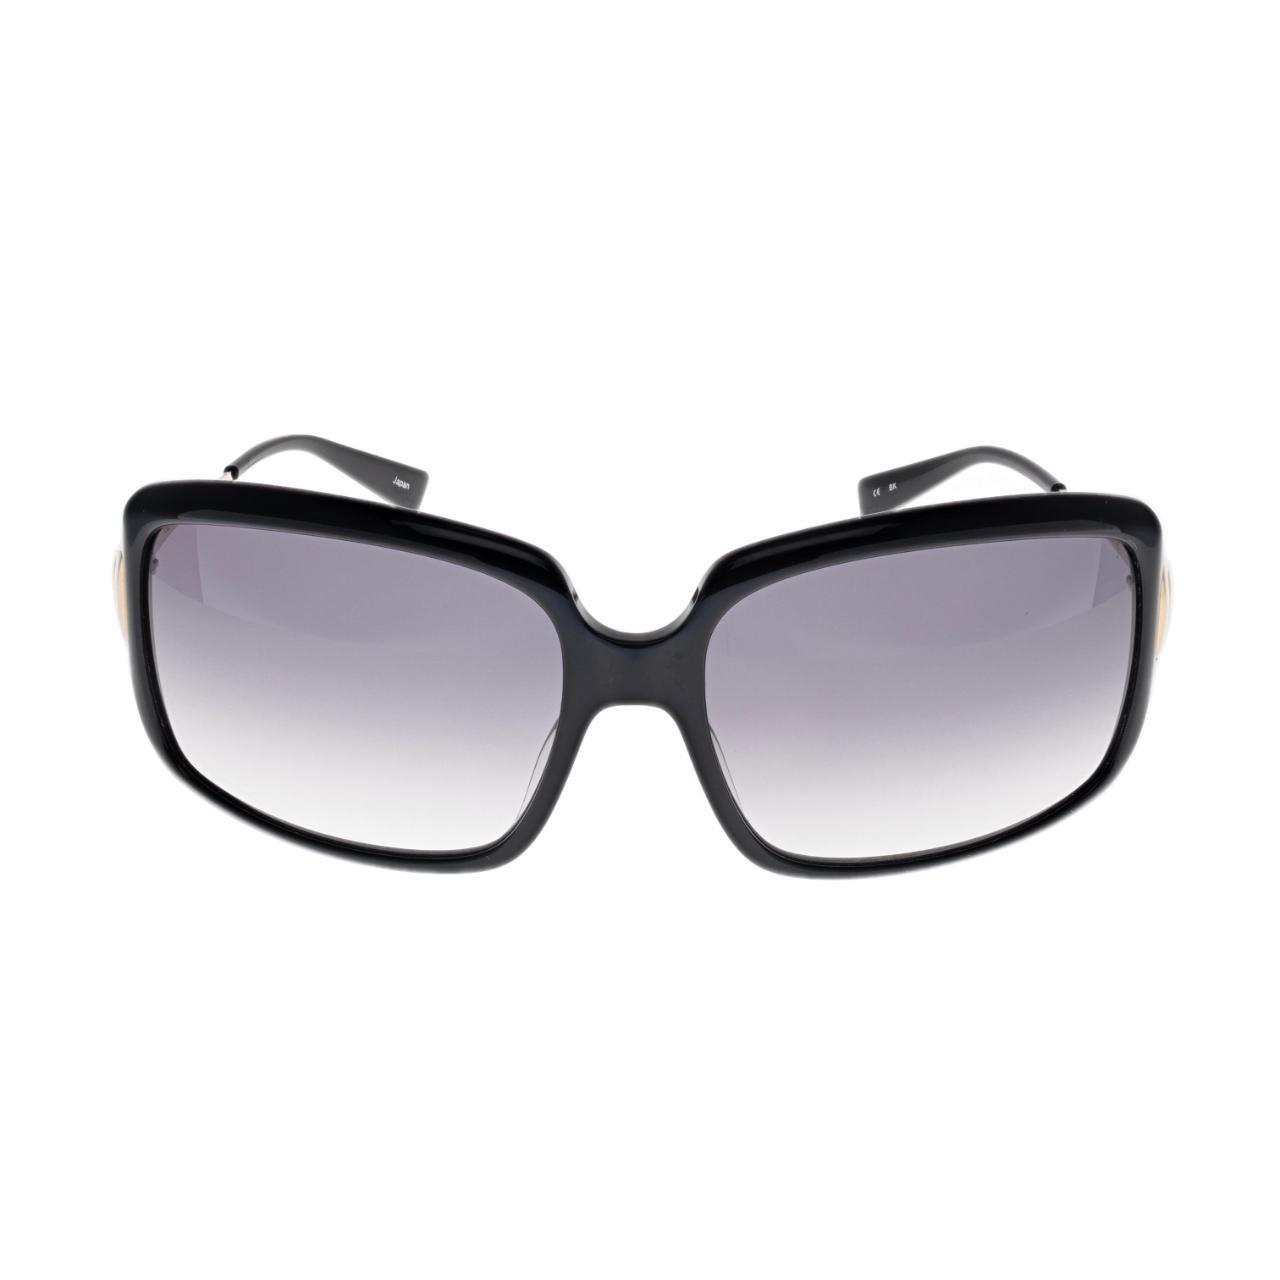 Oliver Peoples Women's Black Sunglasses (2)